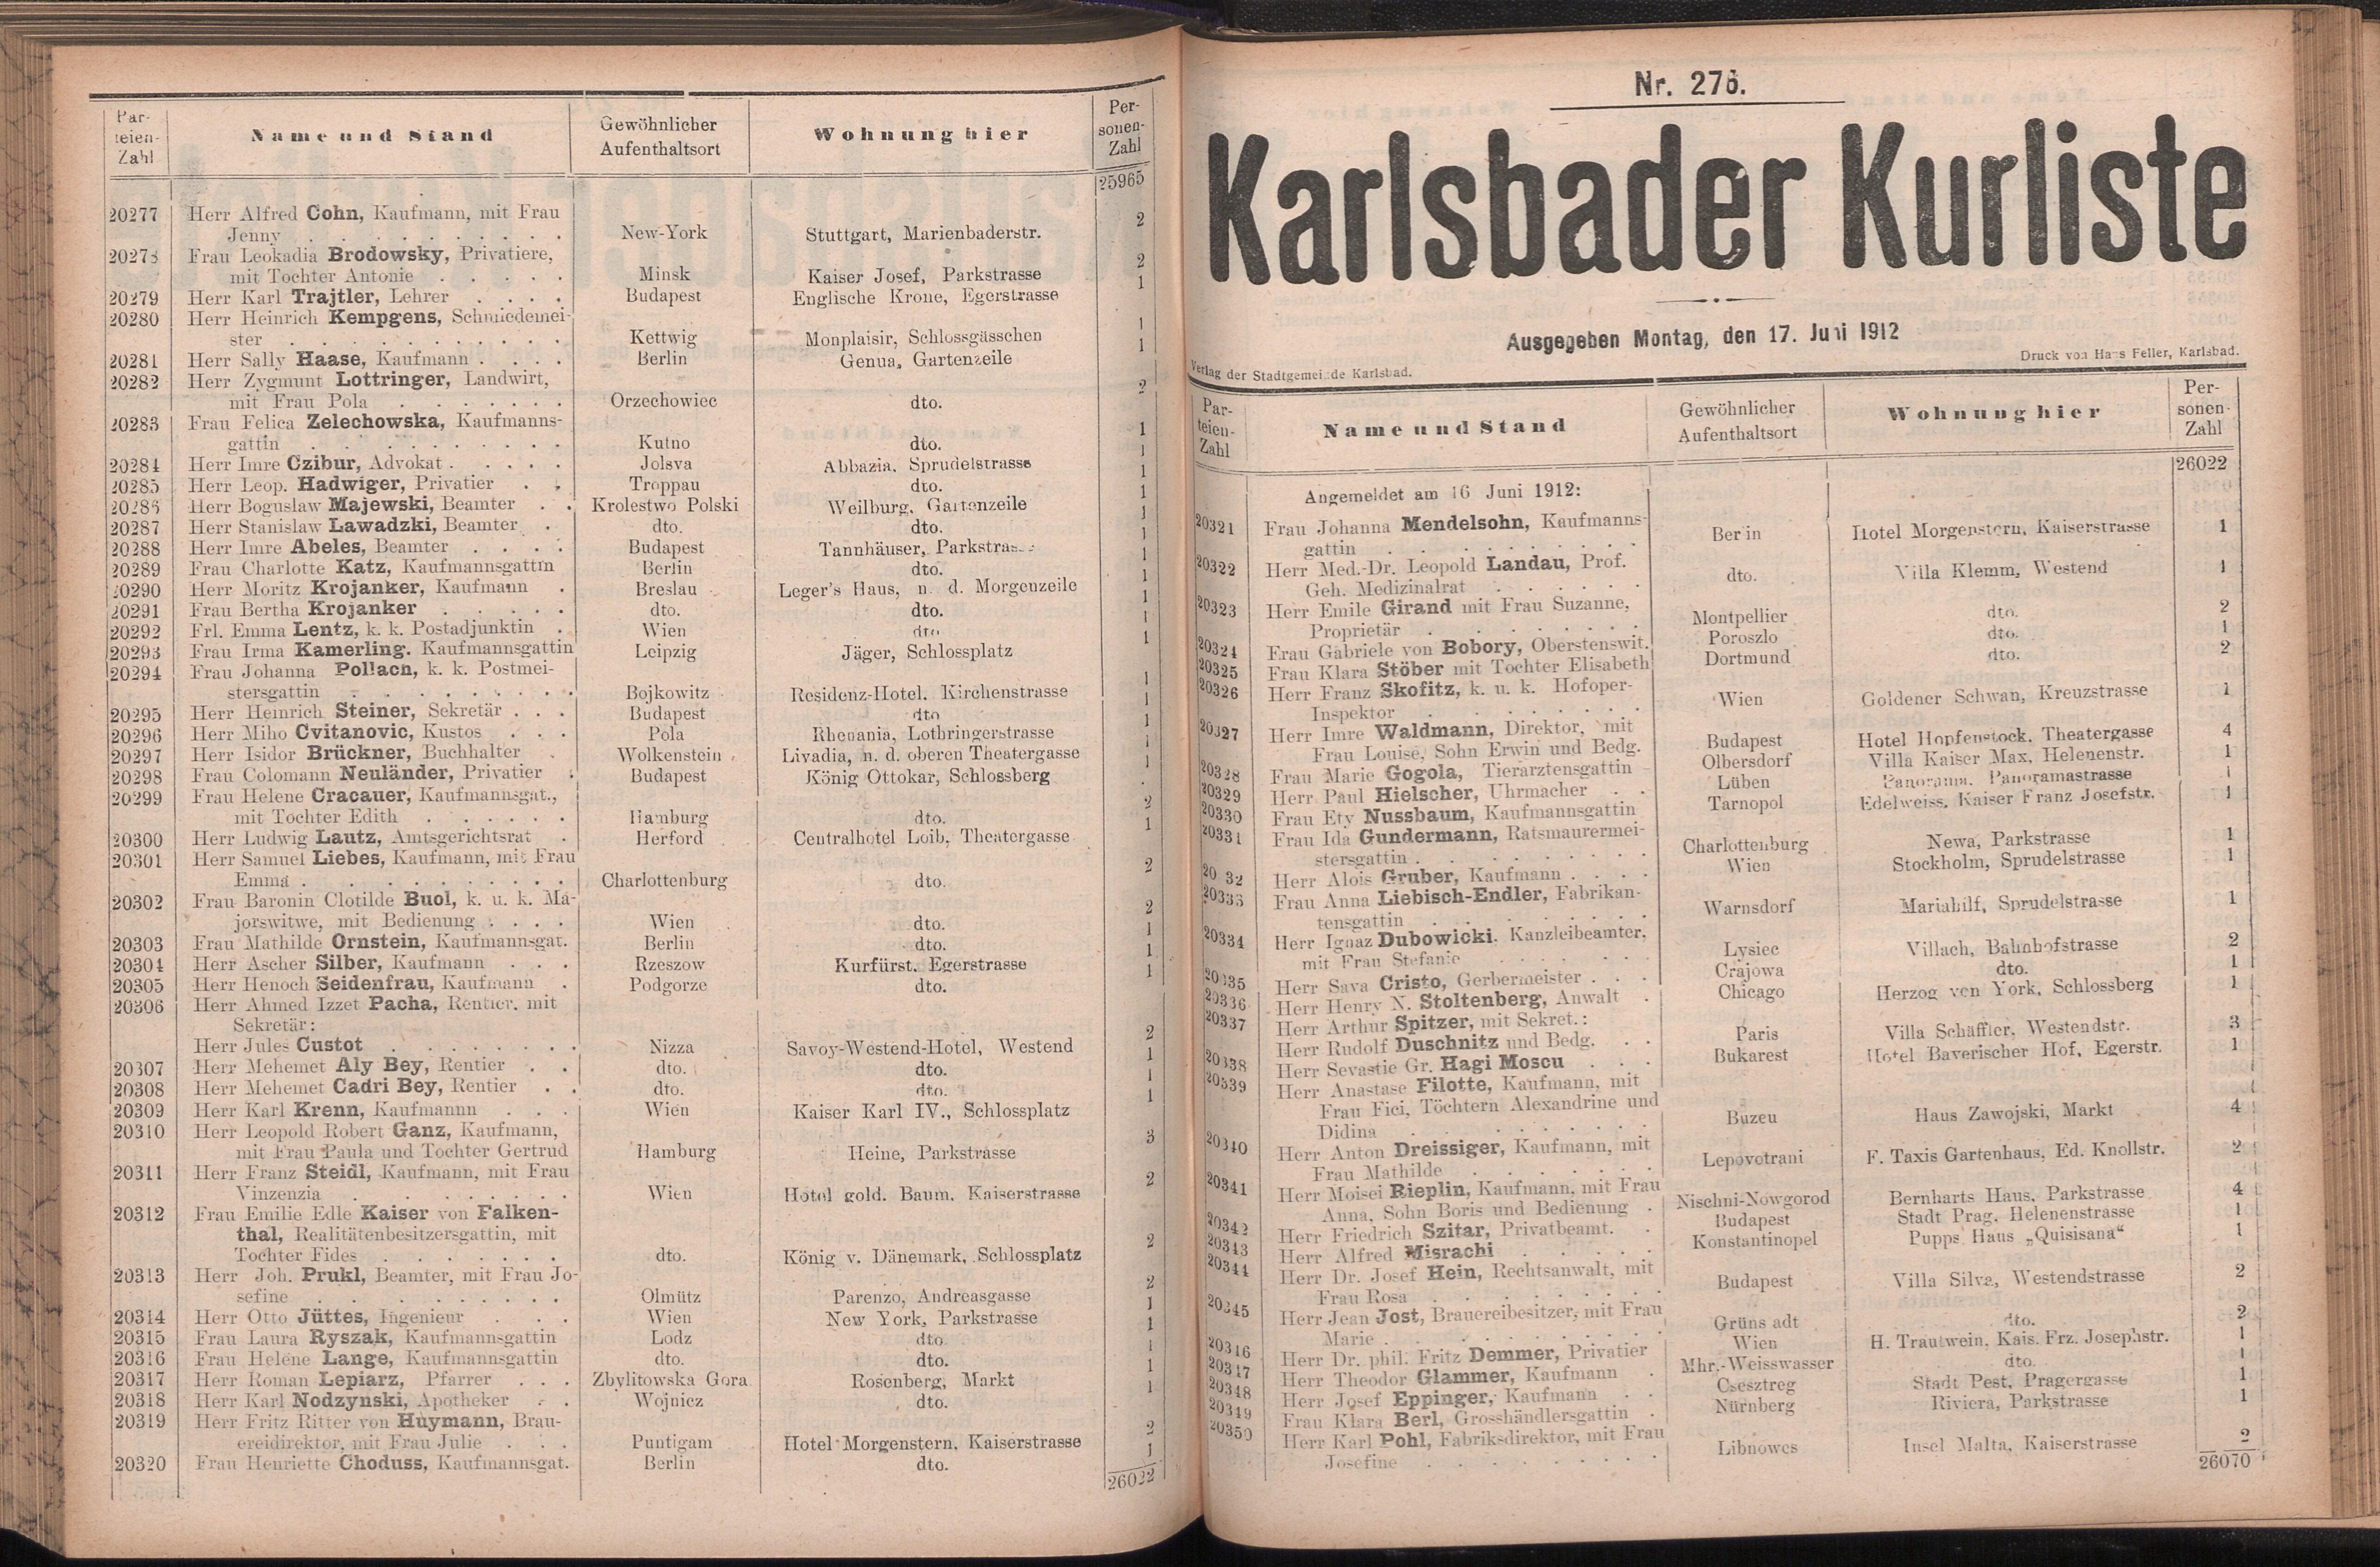 333. soap-kv_knihovna_karlsbader-kurliste-1912-1_3330